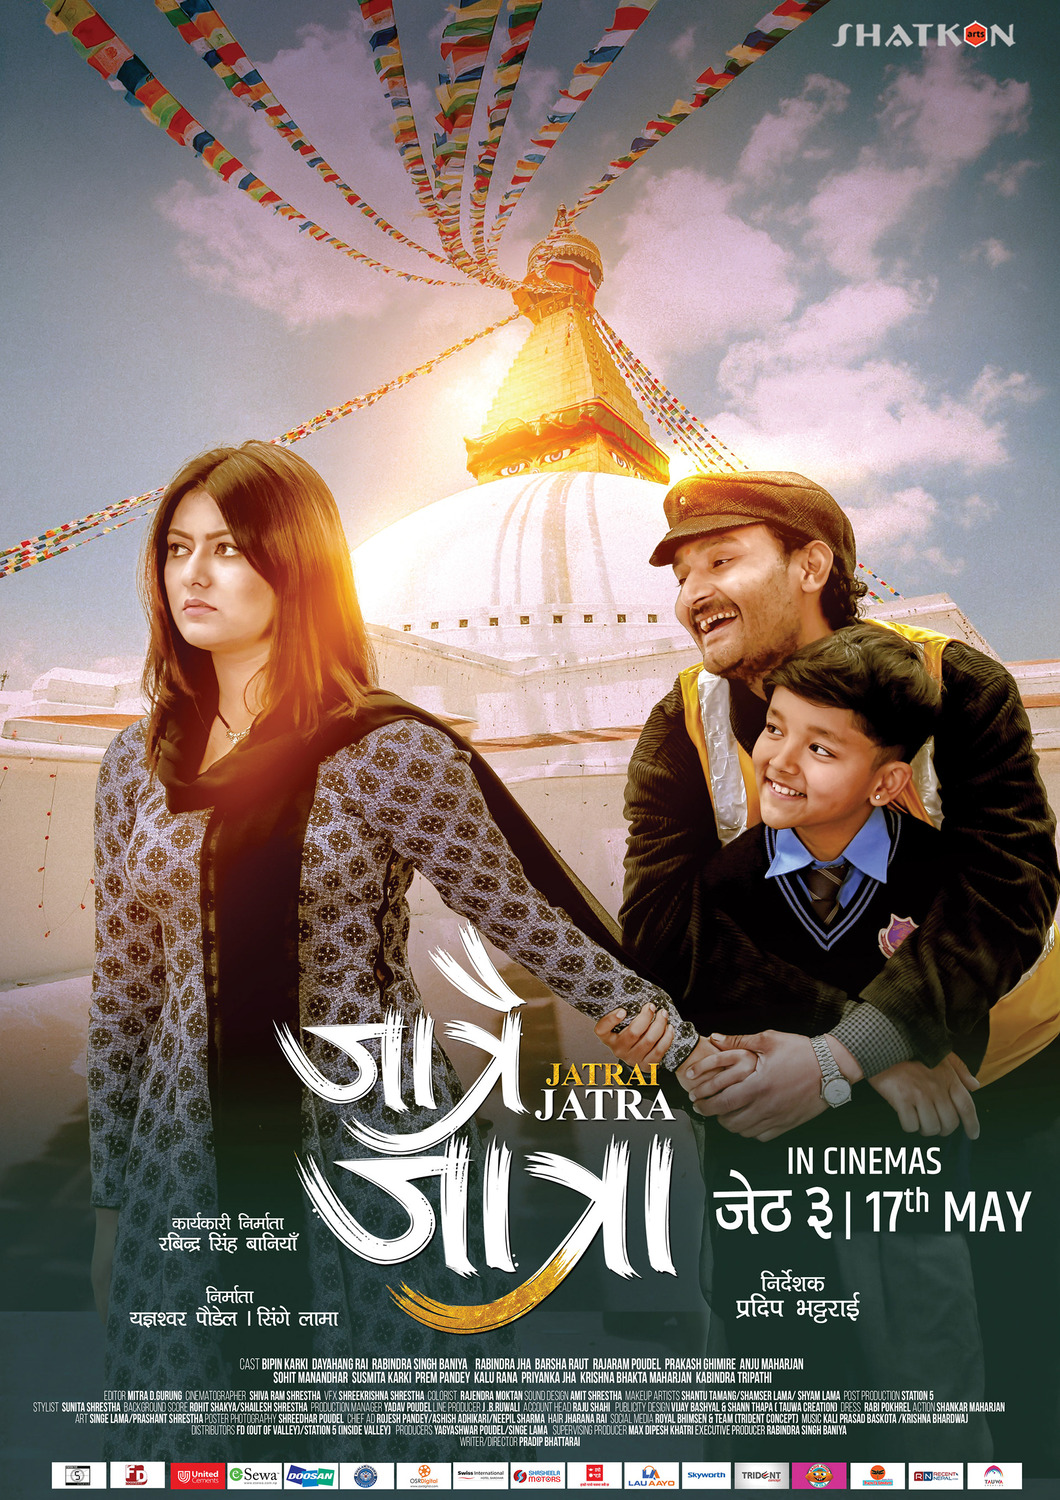 Extra Large Movie Poster Image for Jatrai Jatra (#2 of 4)